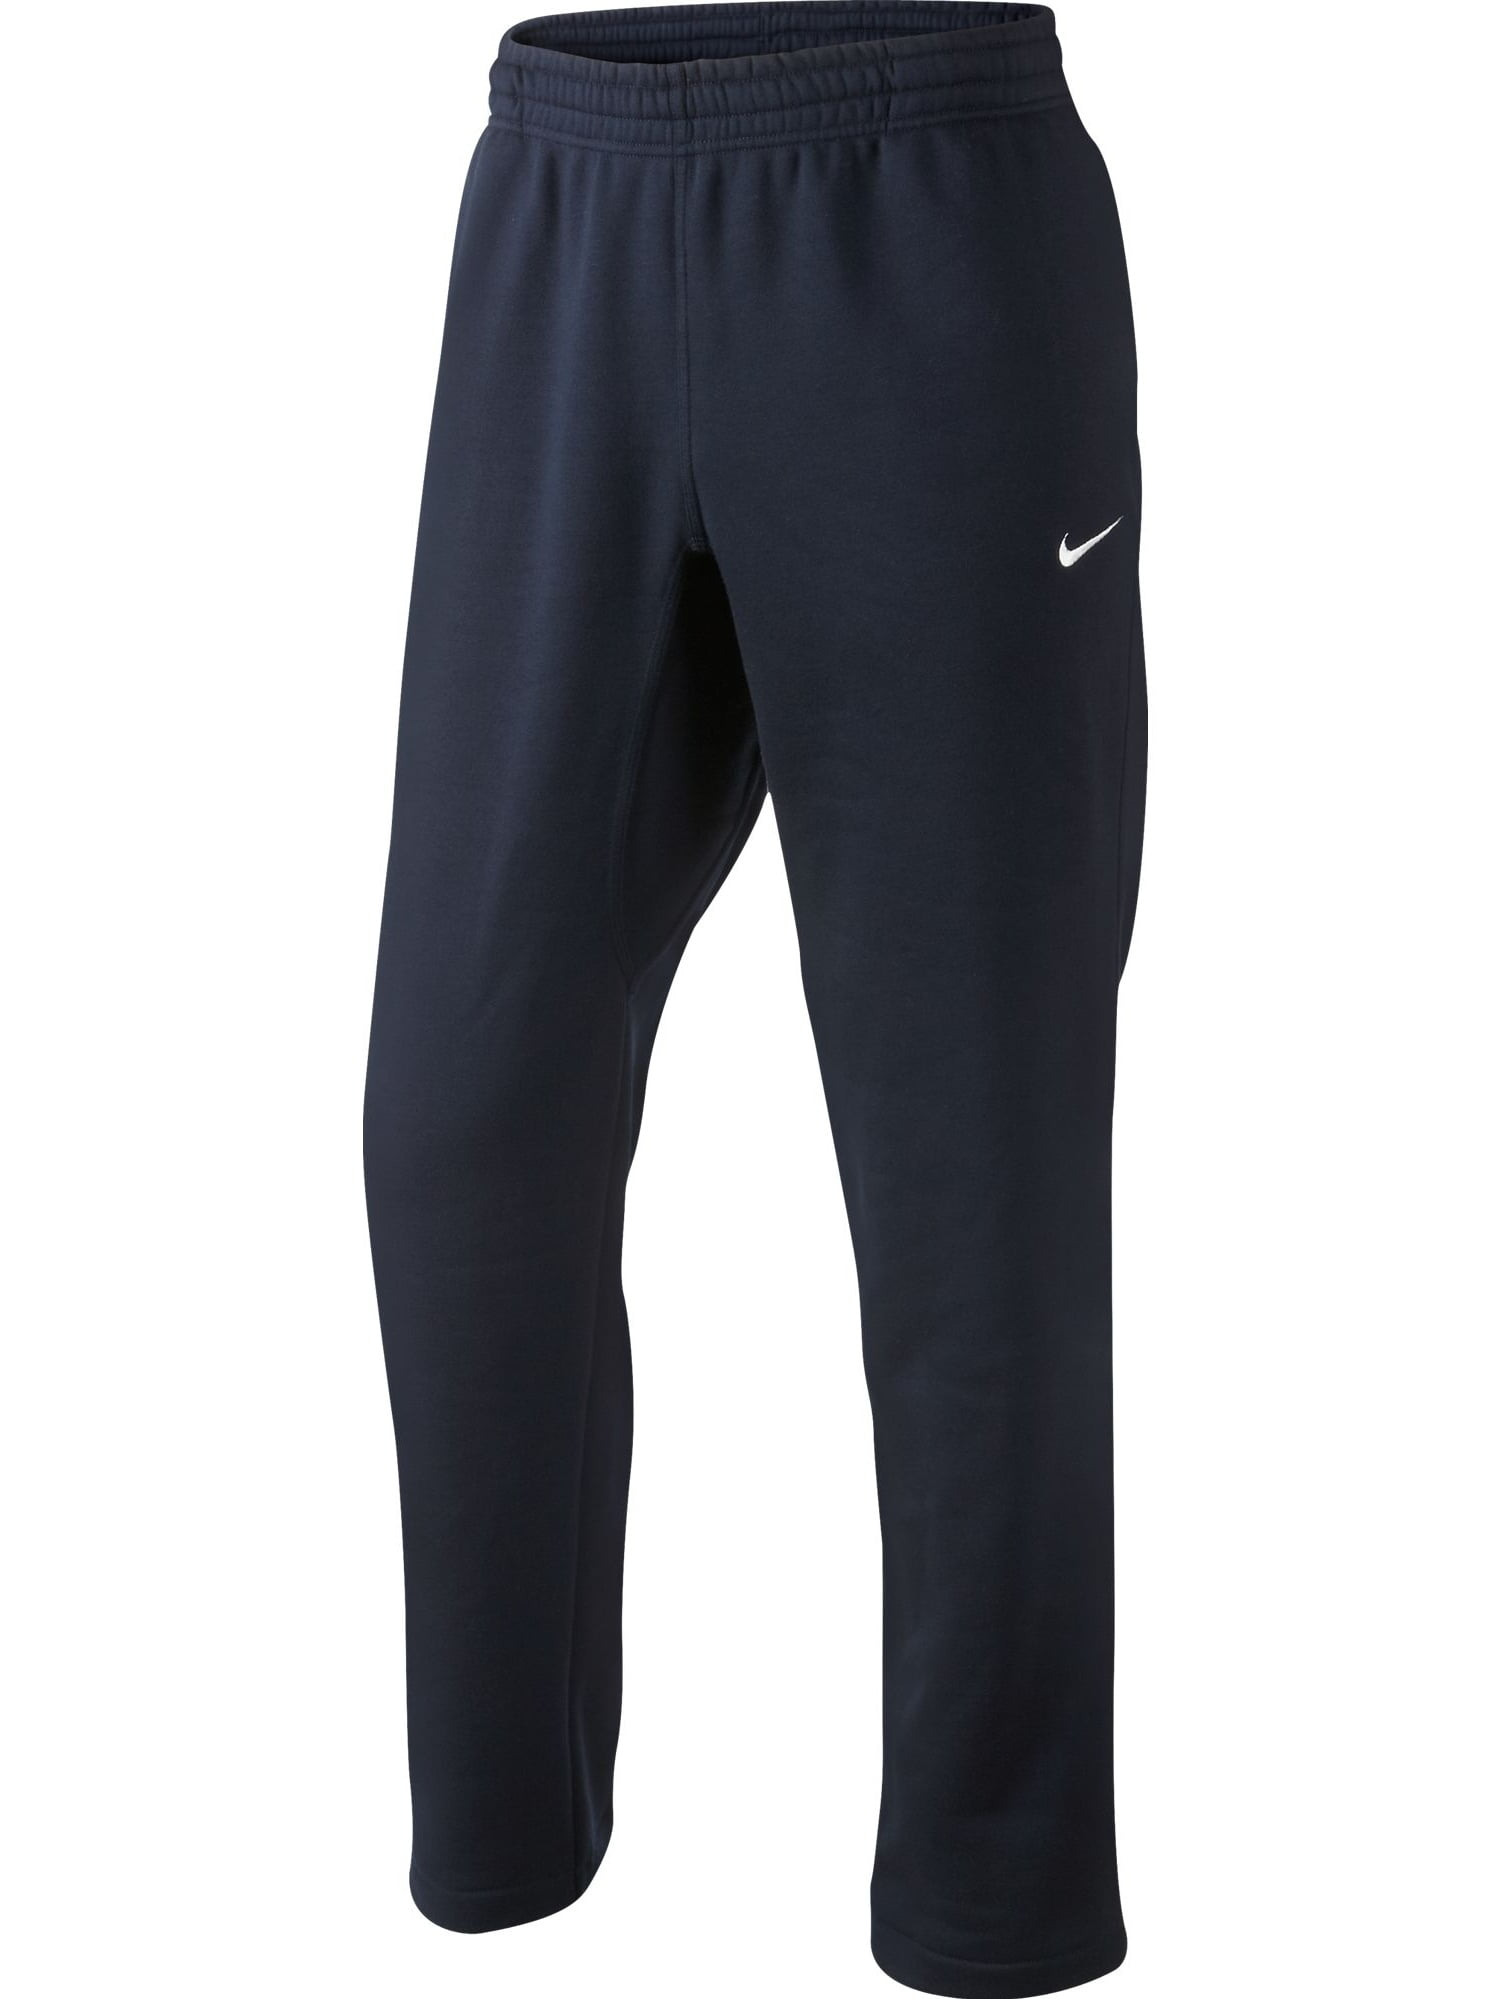 Nike Club OH Men's Fleece Sweatpants Navy/White 611458-473 - Walmart.com